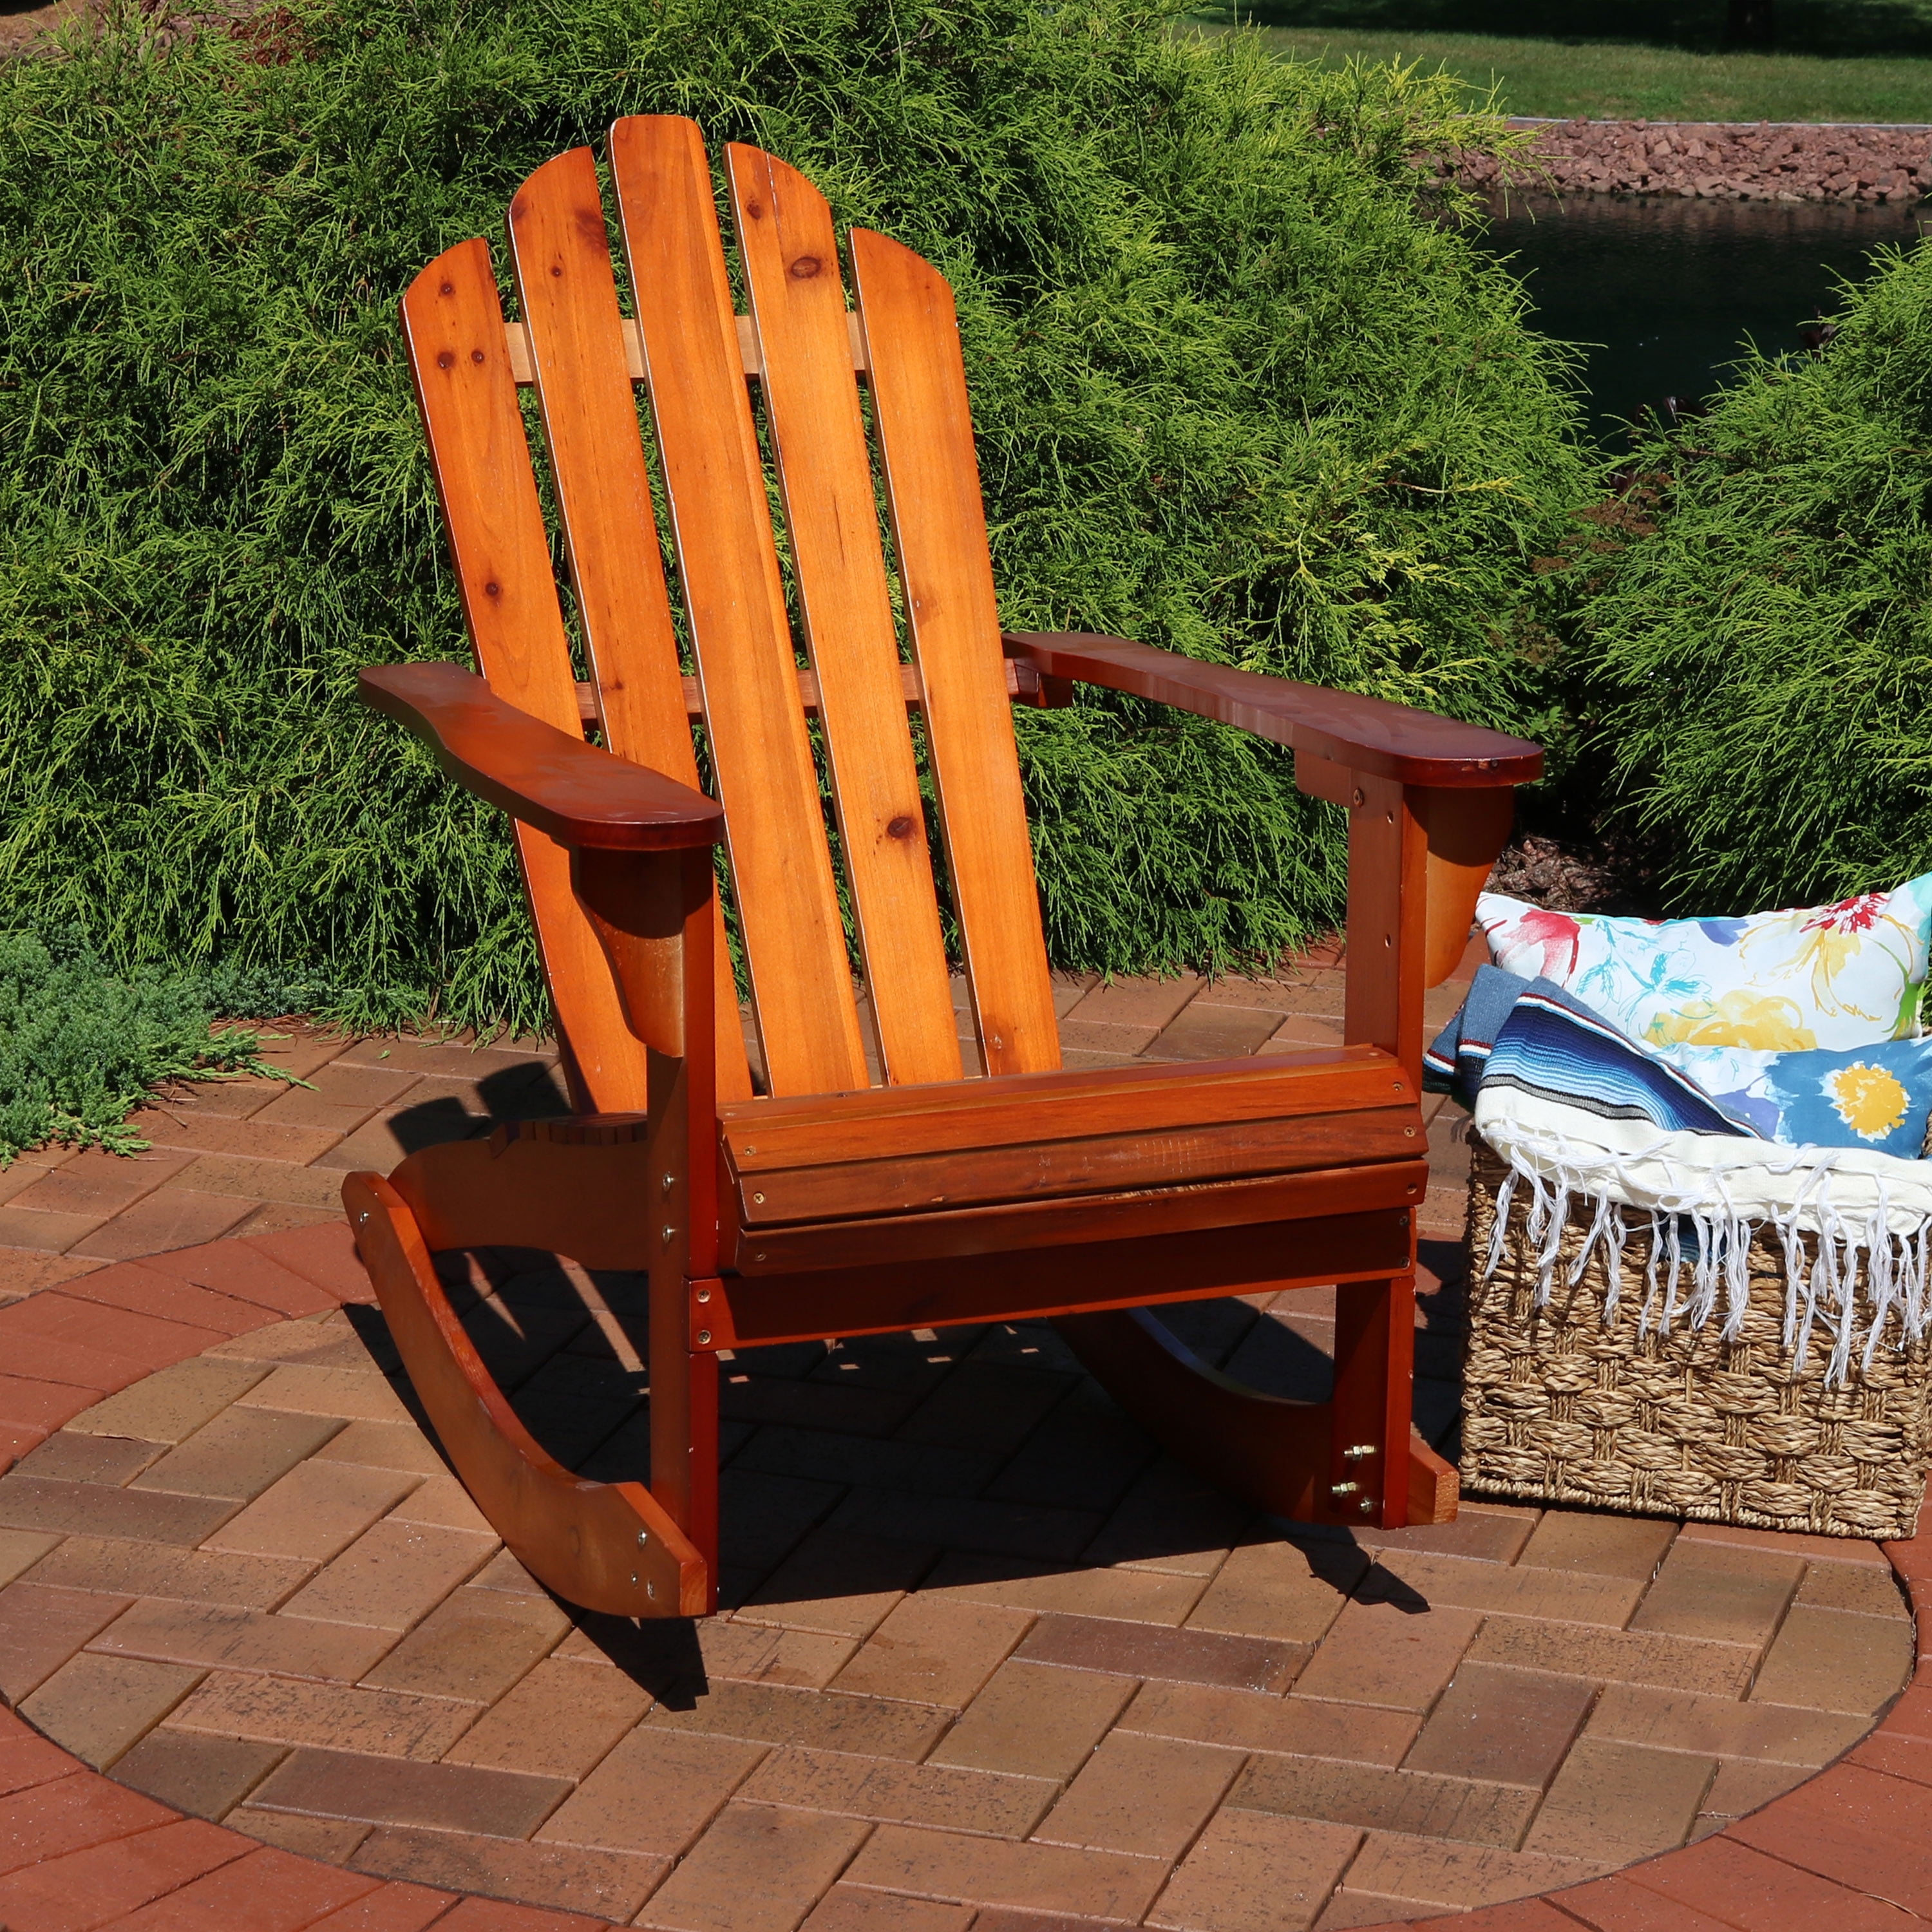 Sunnydaze Wood Adirondack Rocking Chair, Outdoor Patio Rocker, Brown